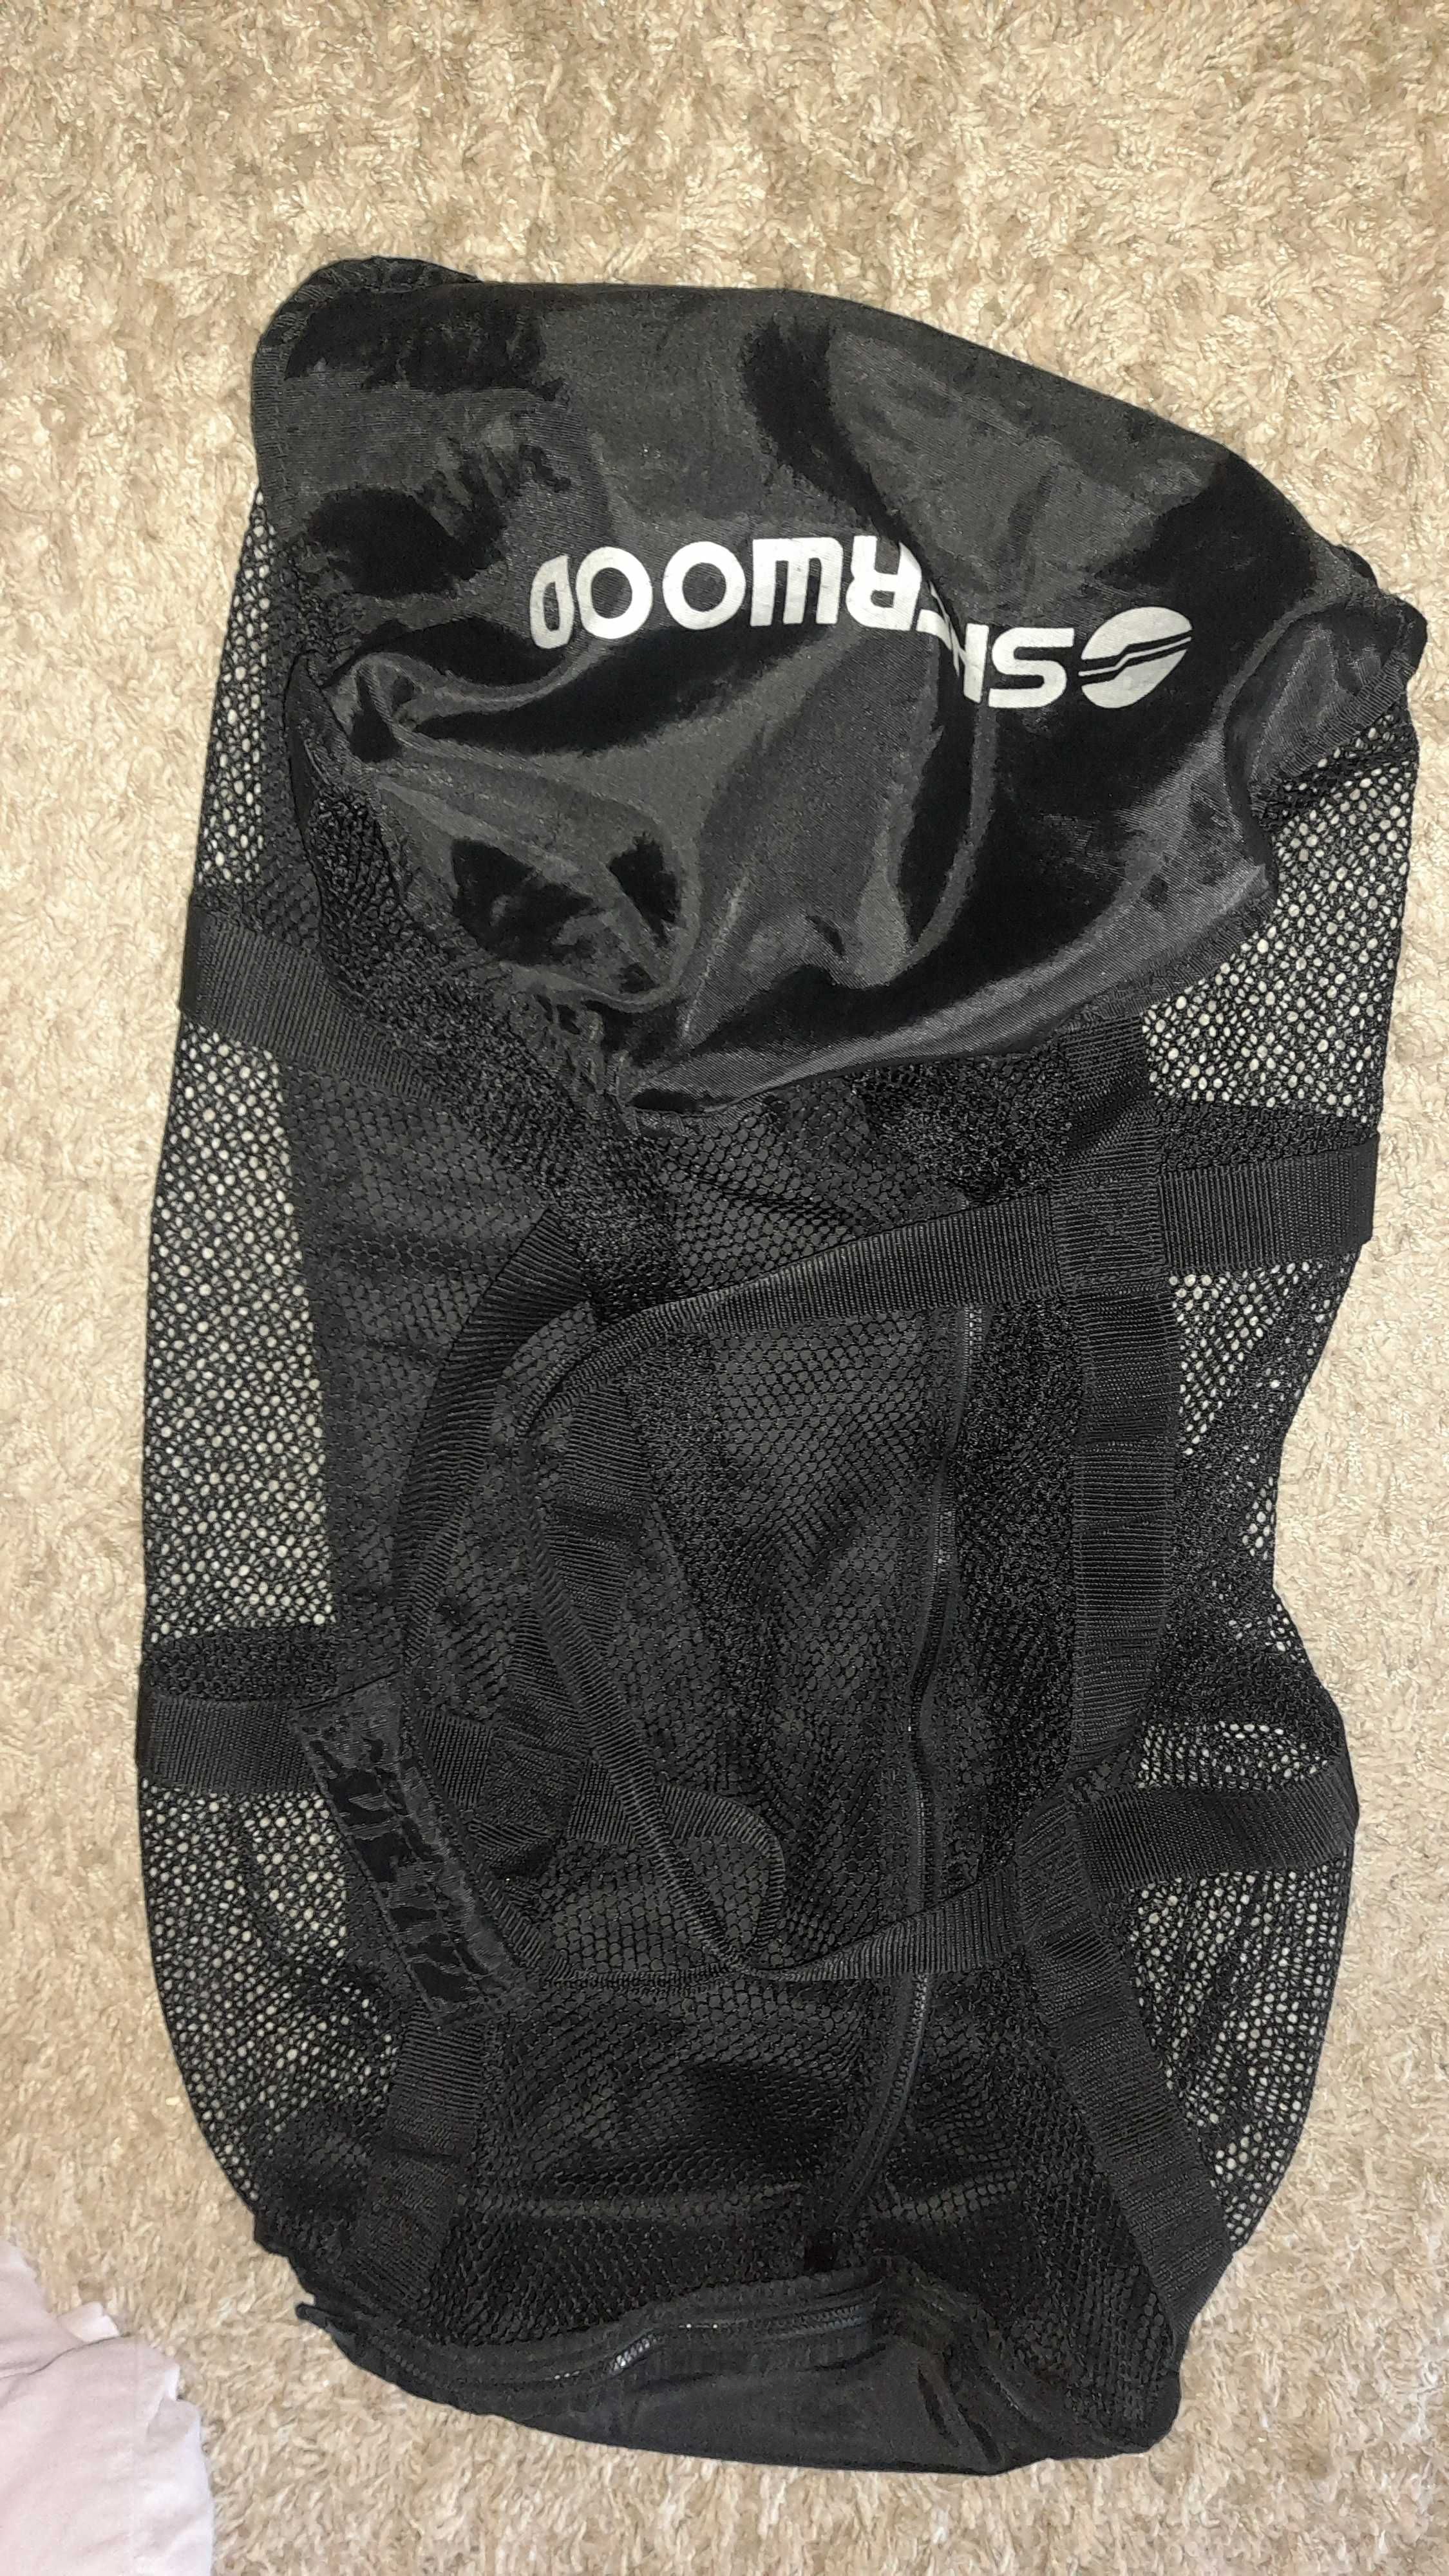 Equipamento completo de mergulho: fato 7mm, botas, máscara e saco.